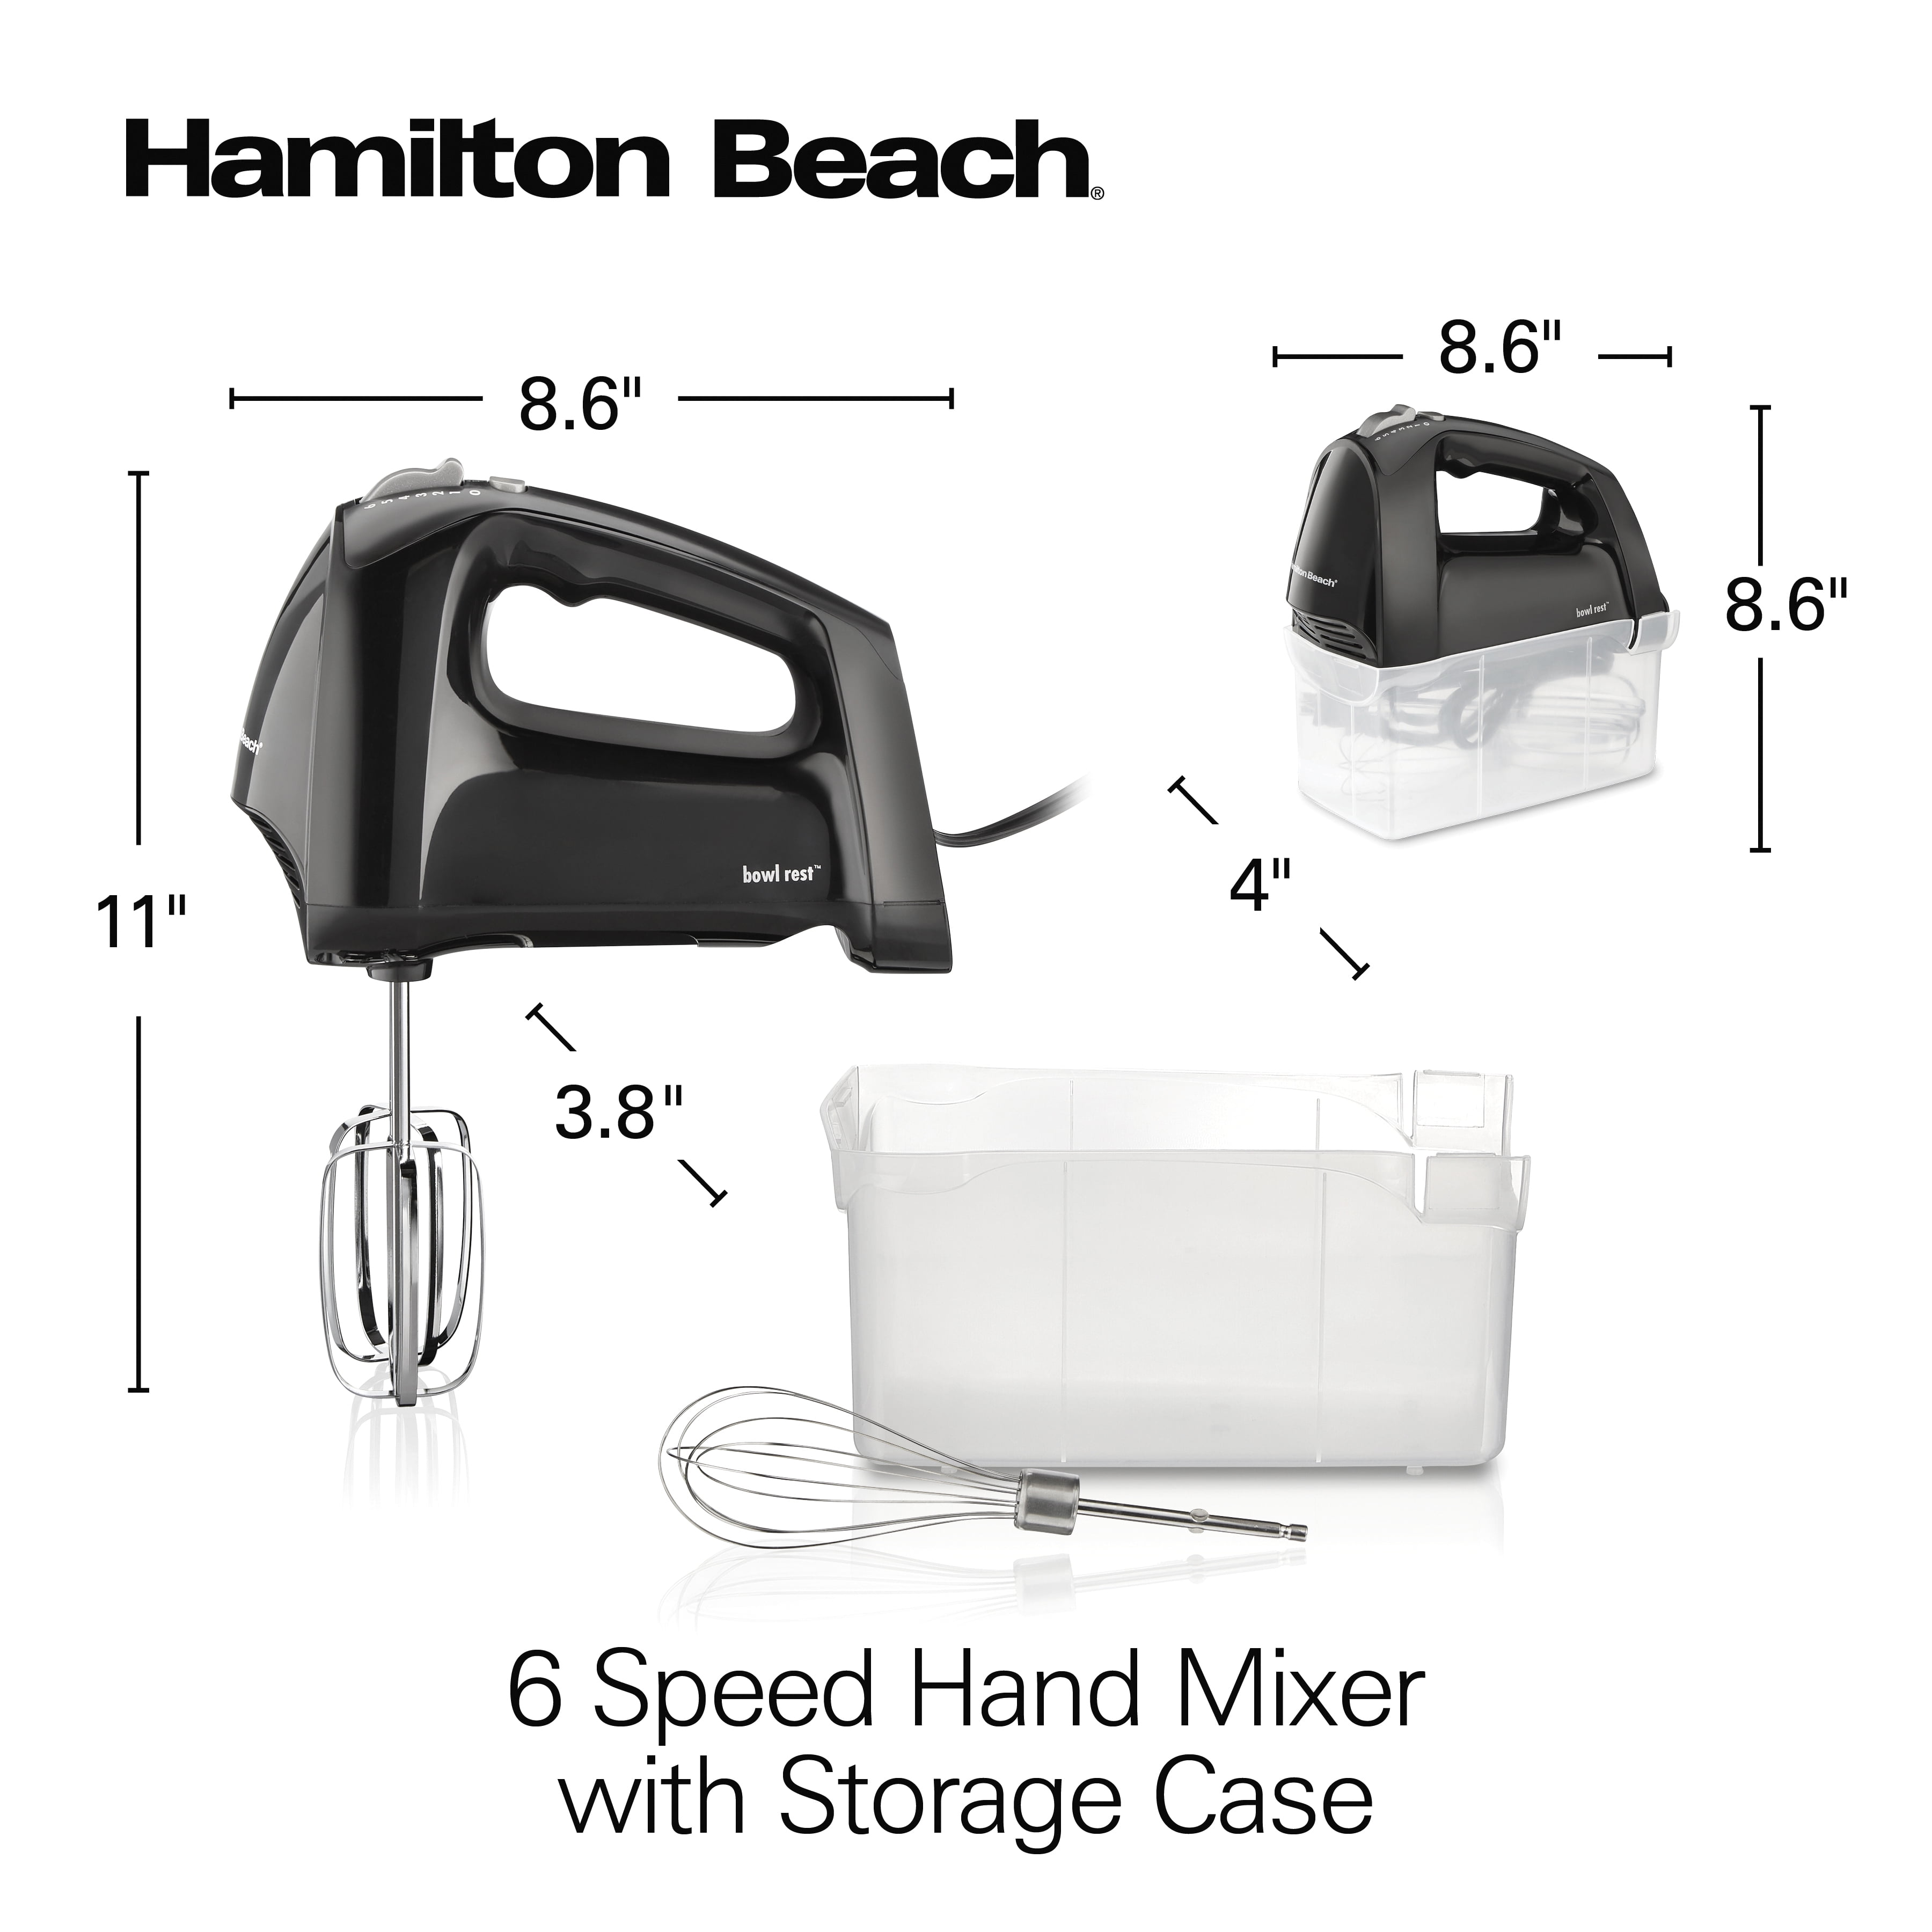 Hamilton Beach 6-Speed Hand Mixer – The Krazy Coupon Outlet